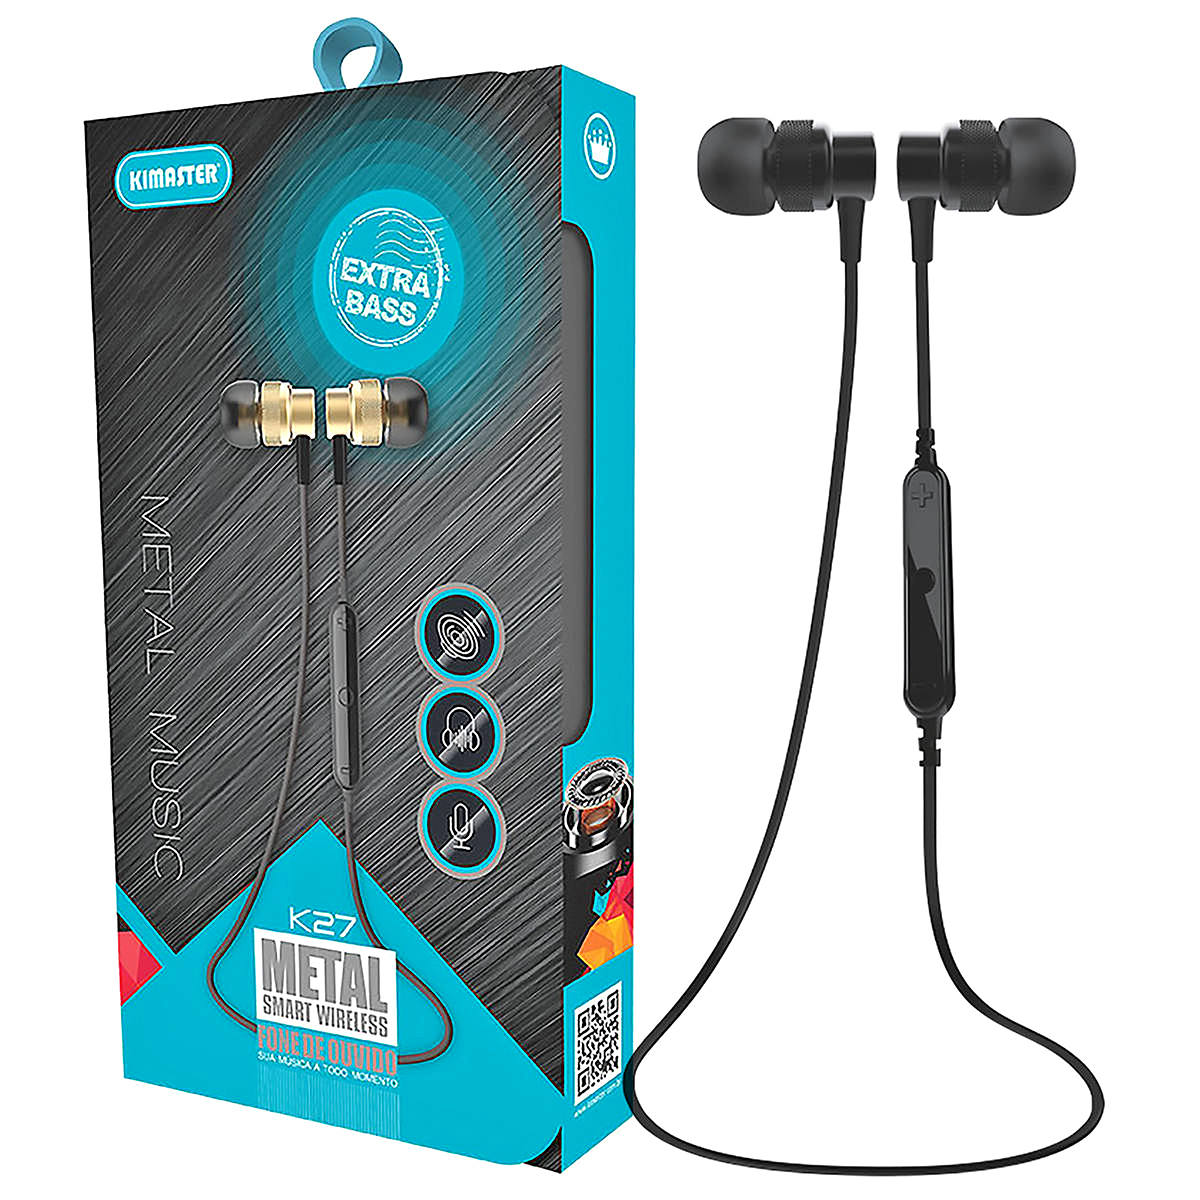 Fone de Ouvido Bluetooth Metal Smart Wireless Extra Bass Microfone Embutido Kimaster K27